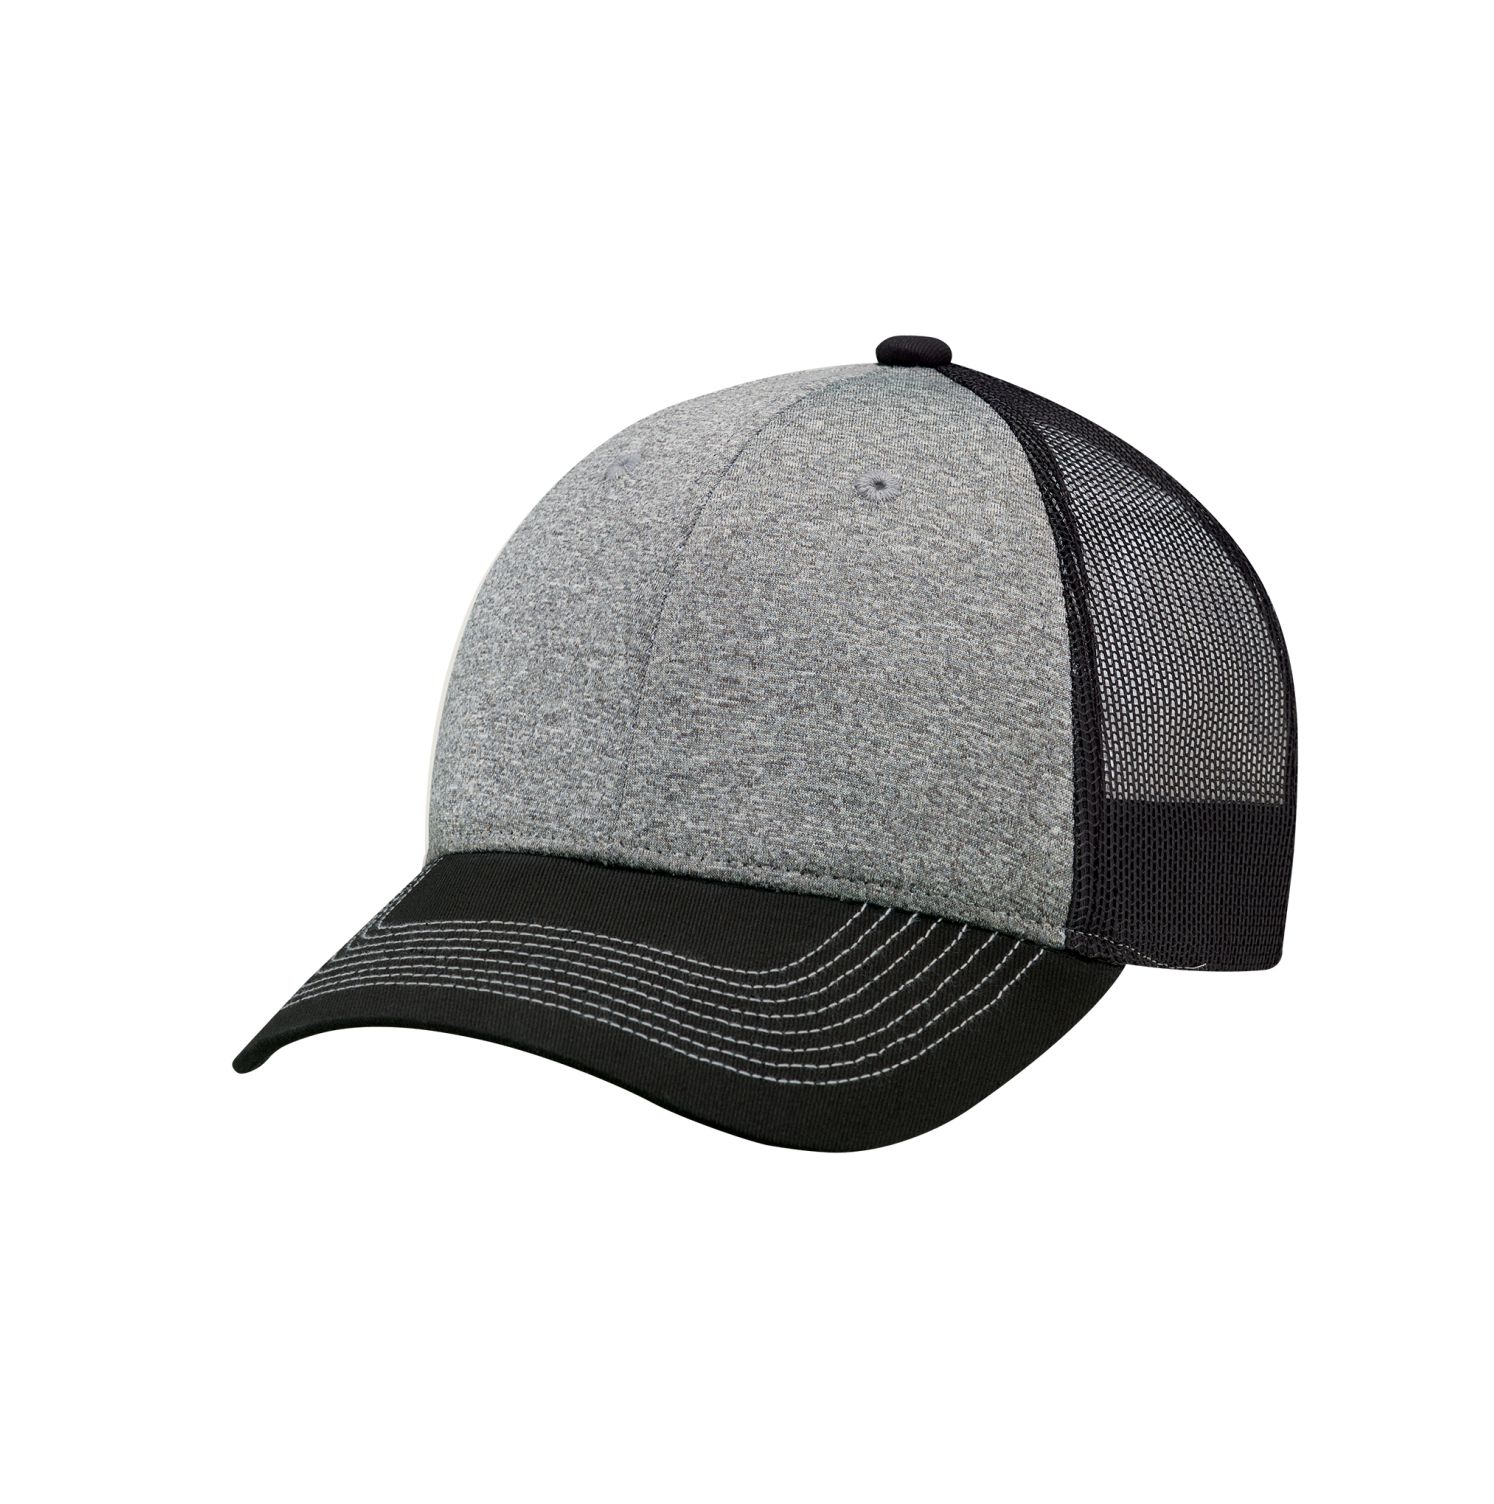 AJM Cotton Drill / Polyester Heather / Nylon Mesh 6 Panel Constructed Full-Fit Hat (Mesh Back) #4G645M Black / Charcoal / Black